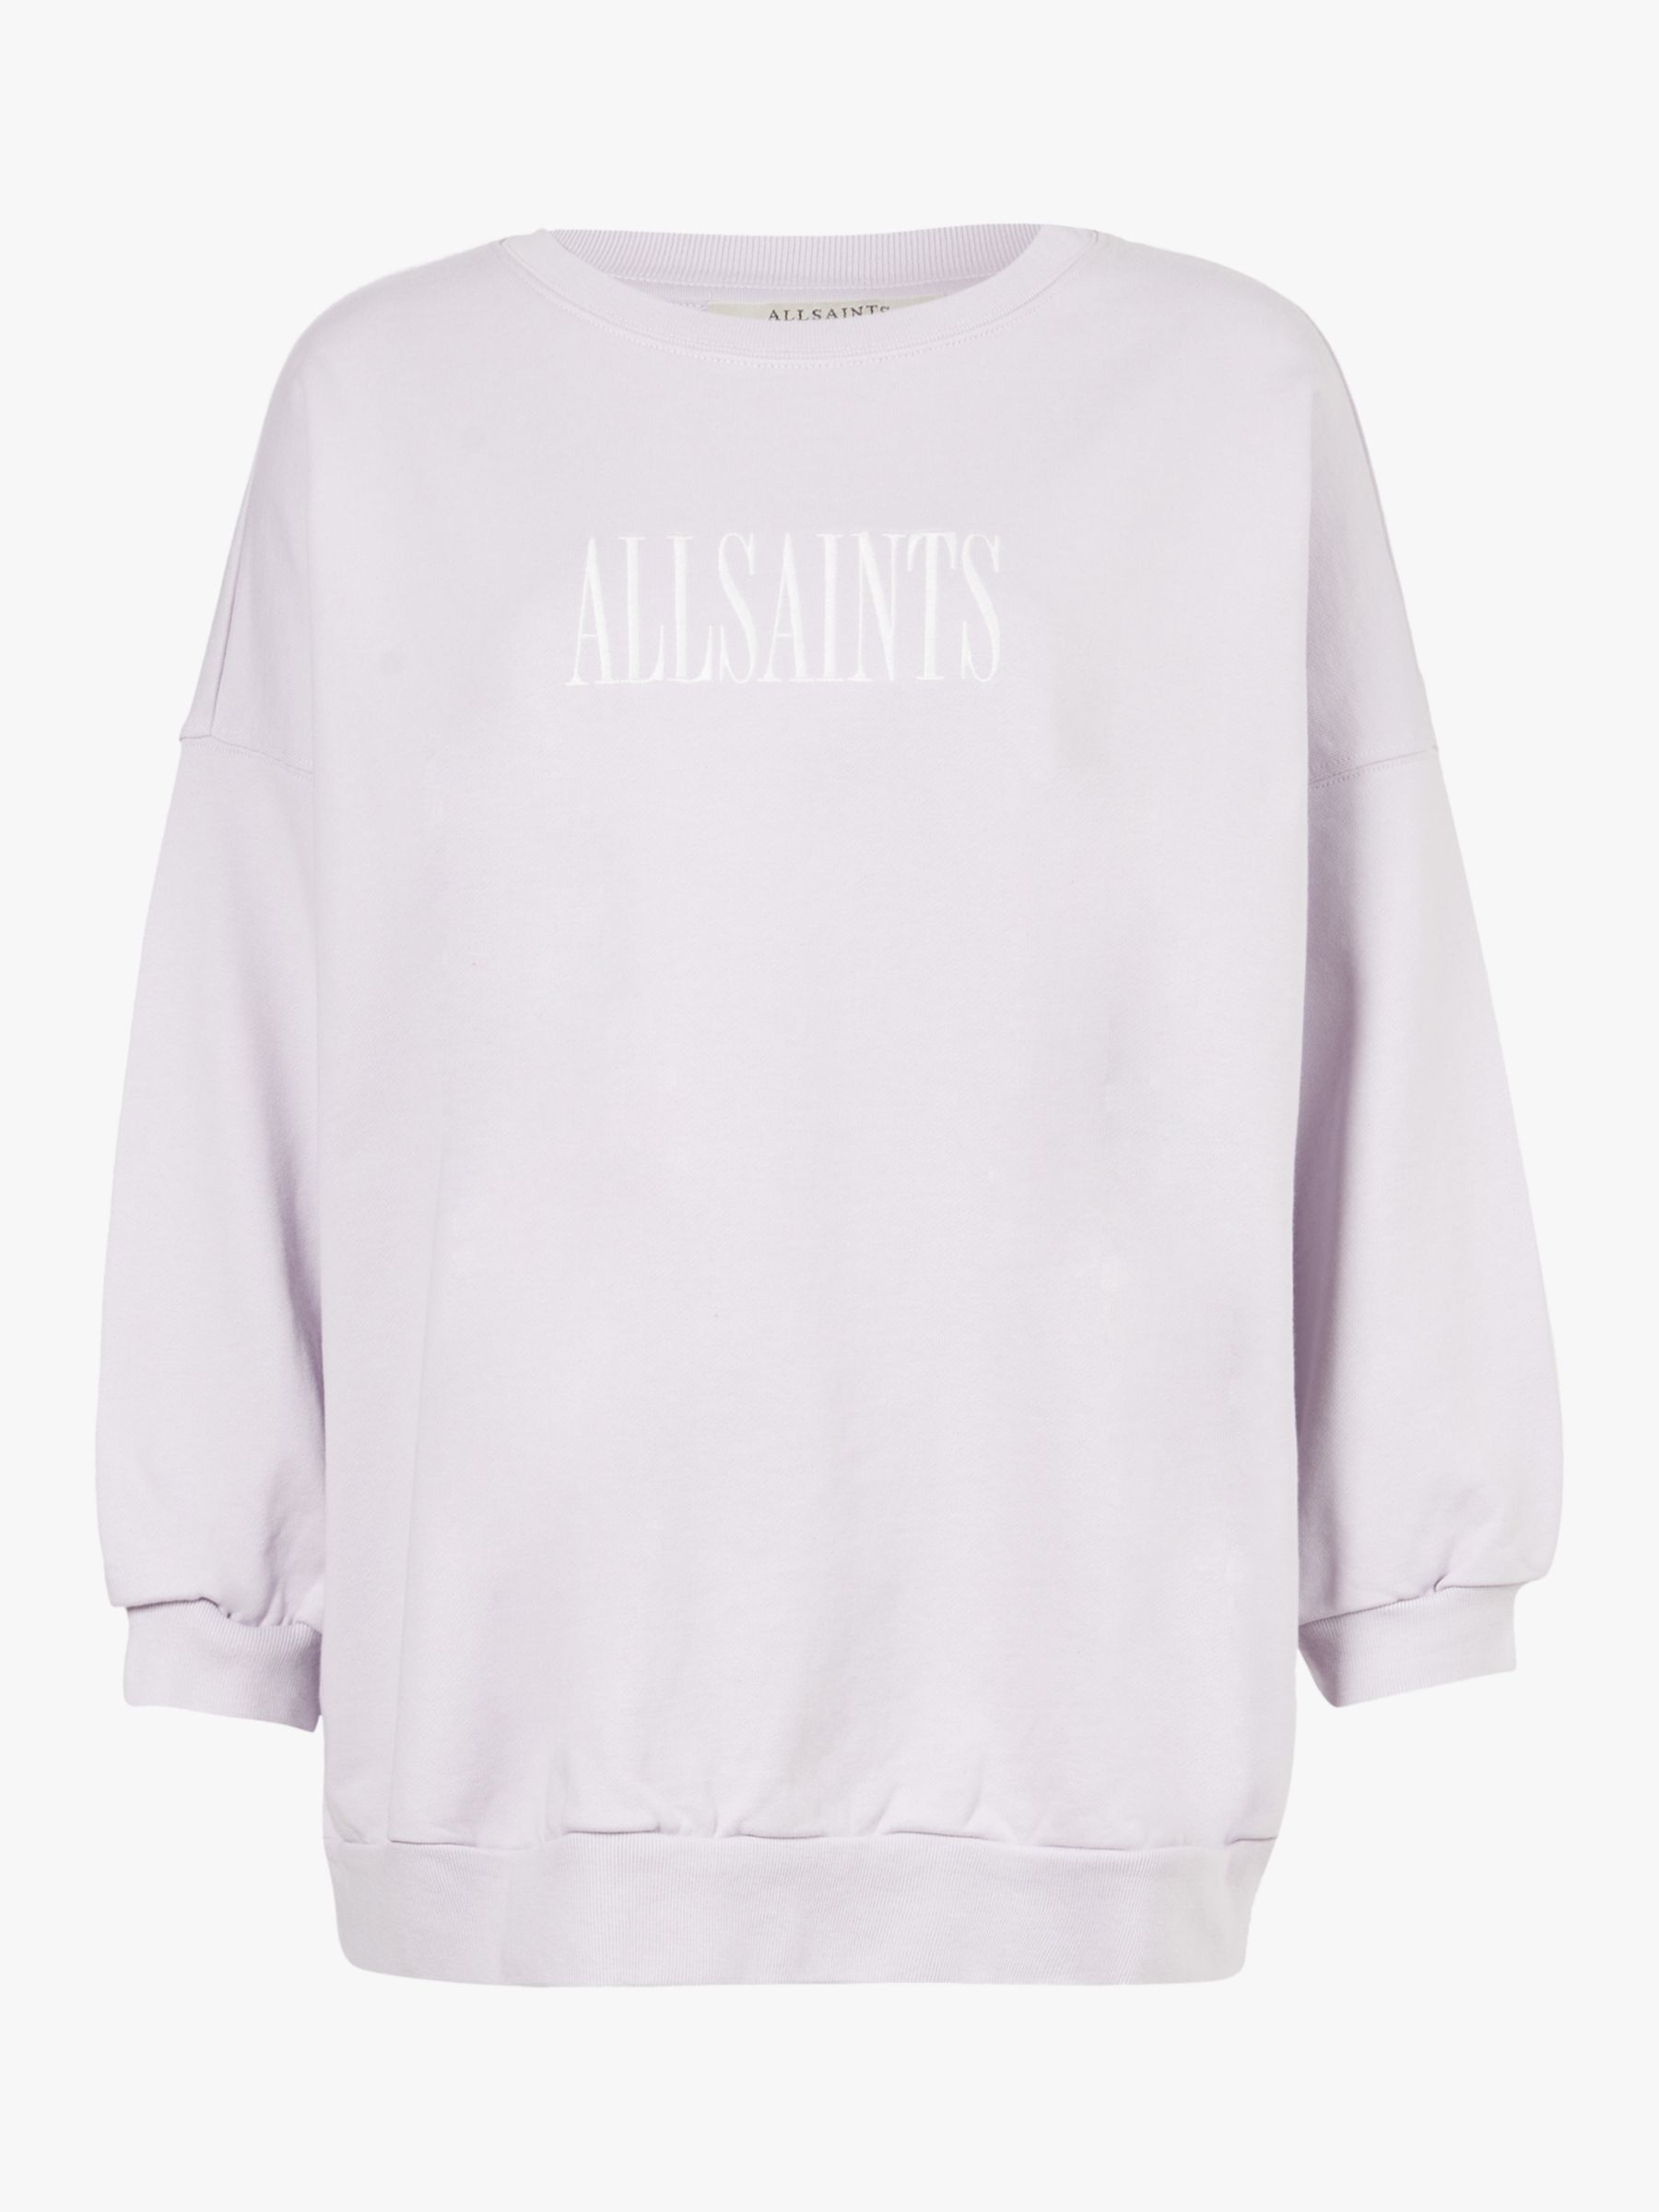 AllSaints Stamp Storn Sweatshirt, Misty Lilac